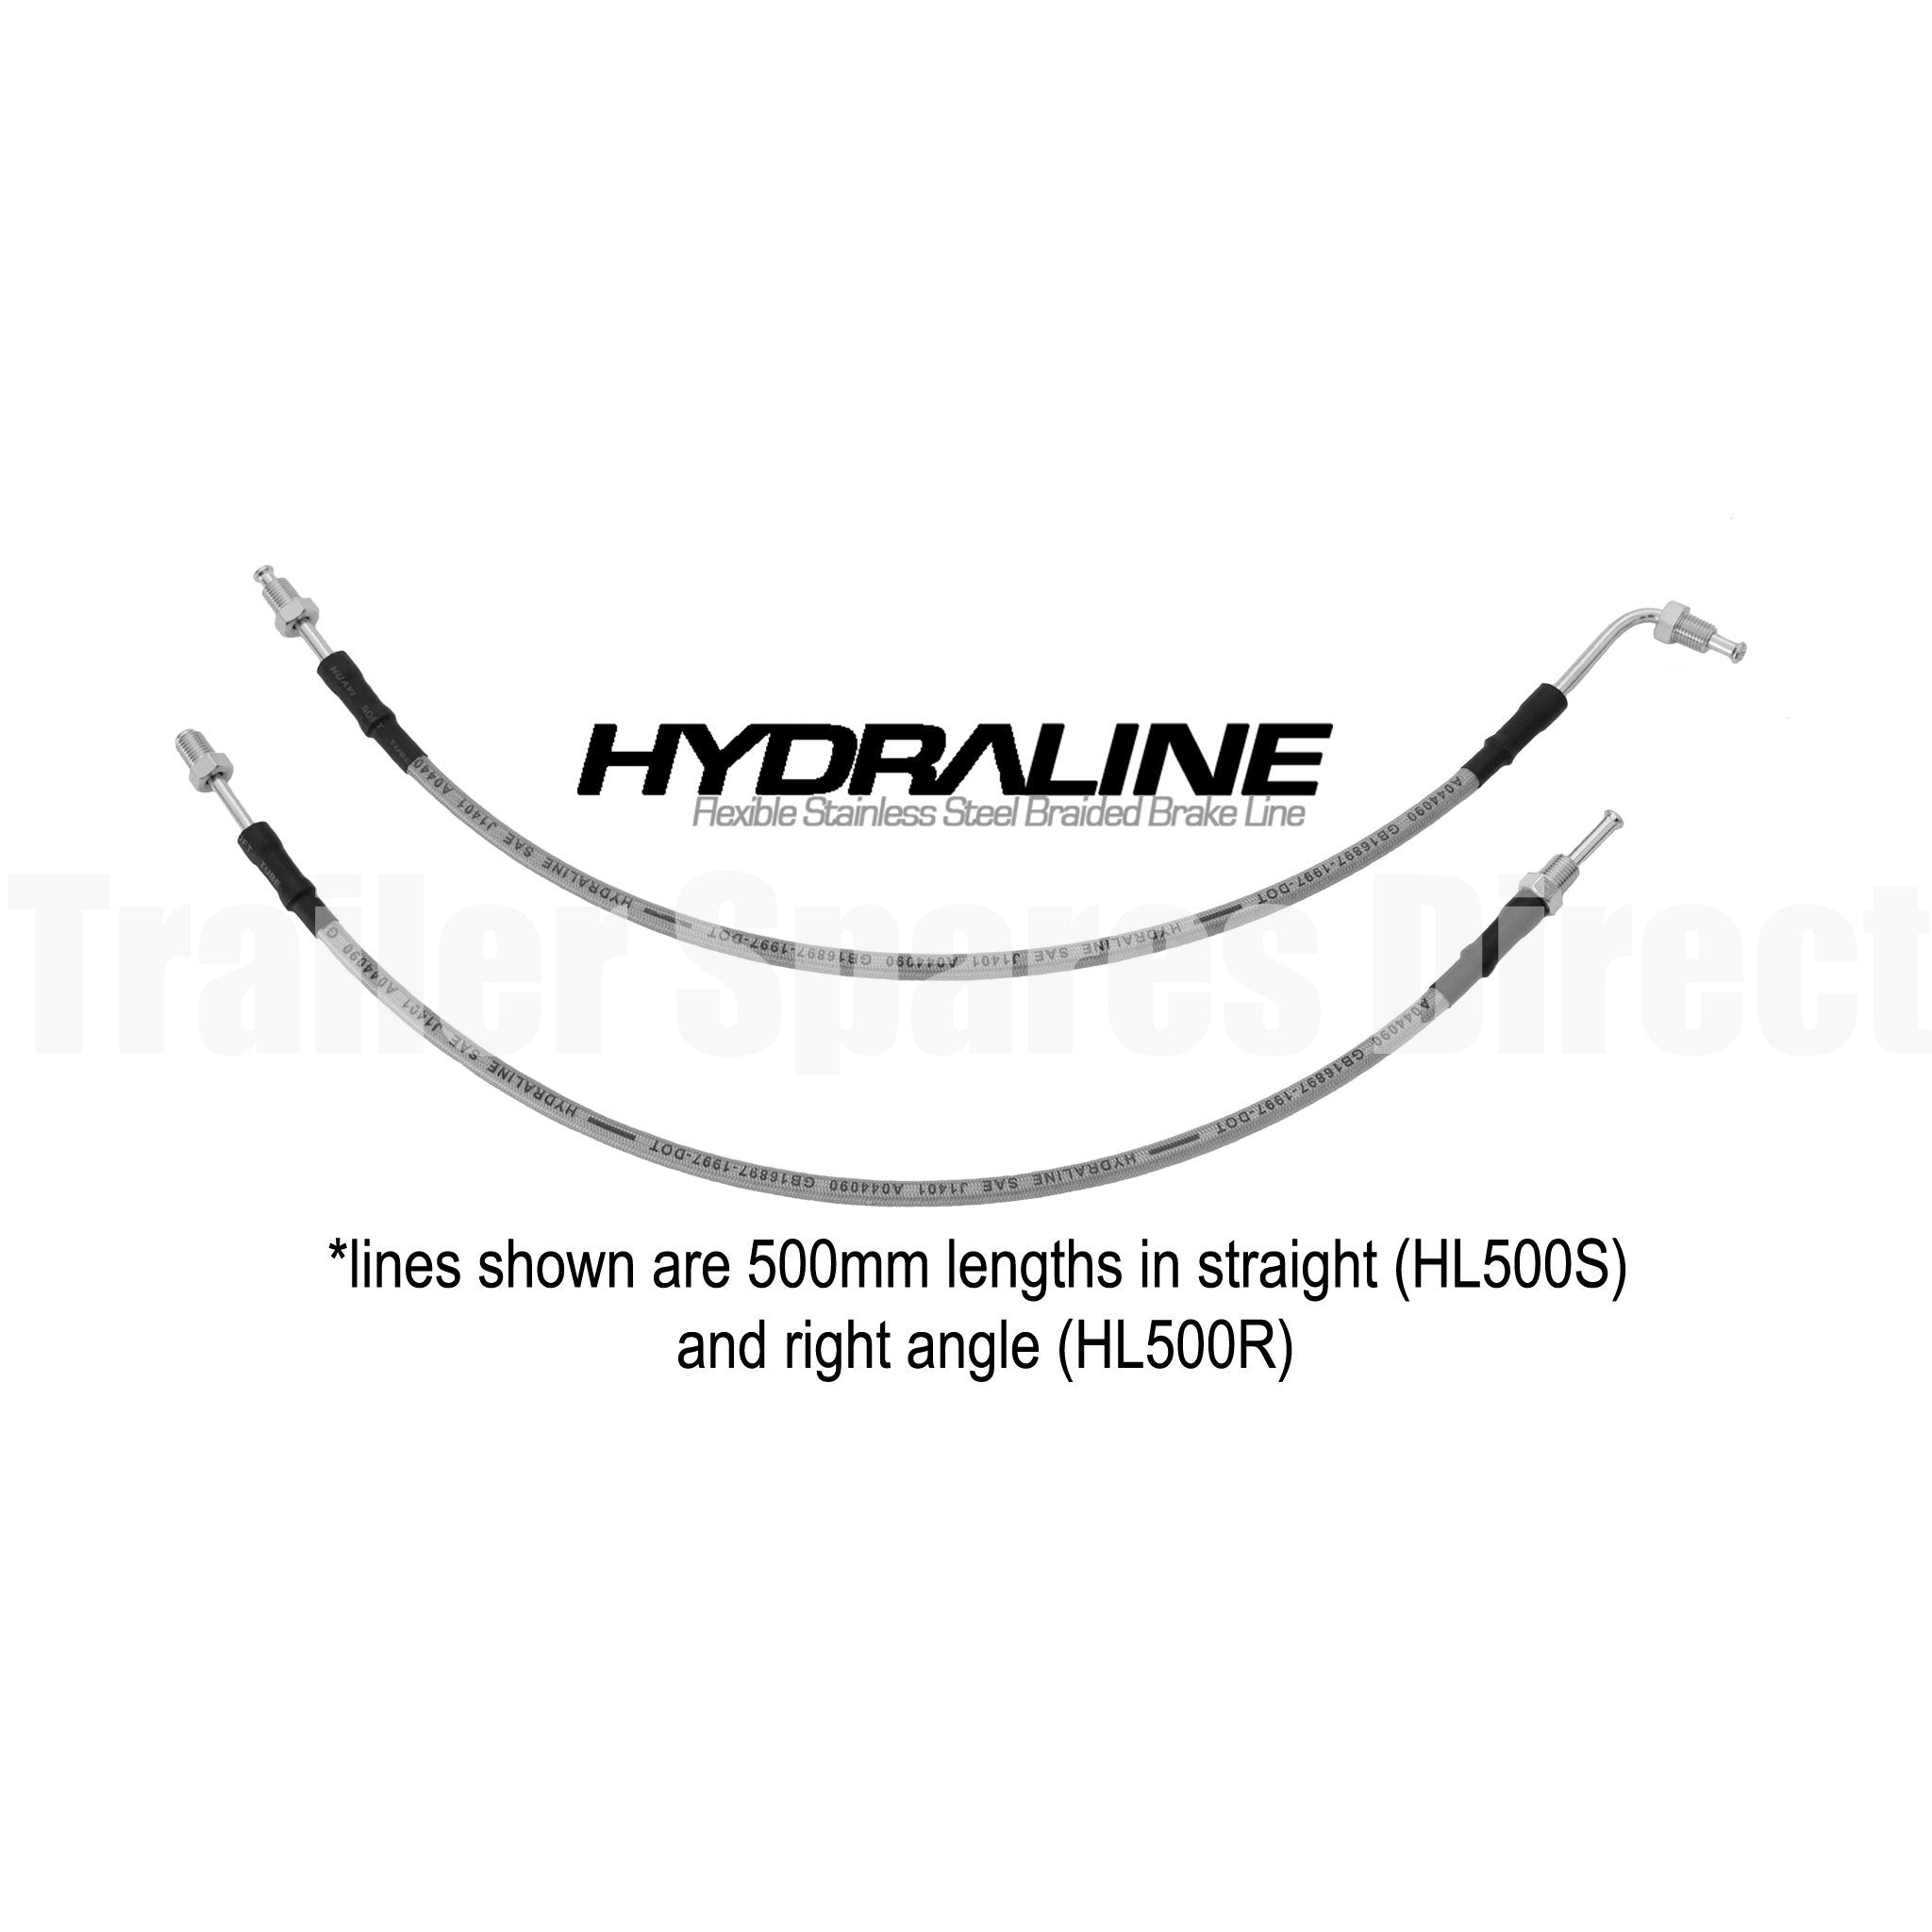 1200mm HydraLine brake hose - 90 degree end fitting